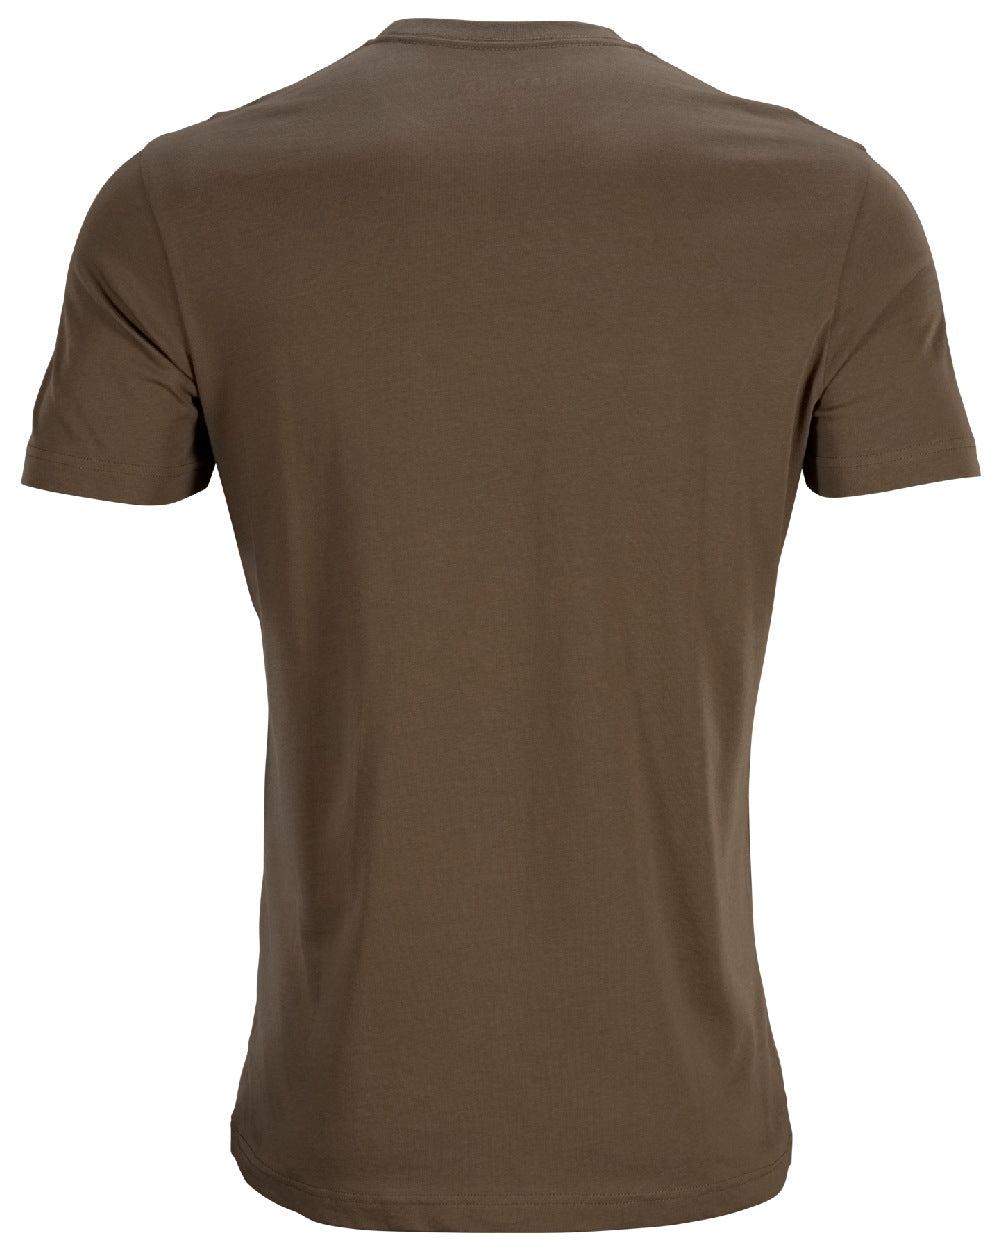 Slate Brown coloured Harkila Pro Hunter Short Sleeve T-Shirt on white background 